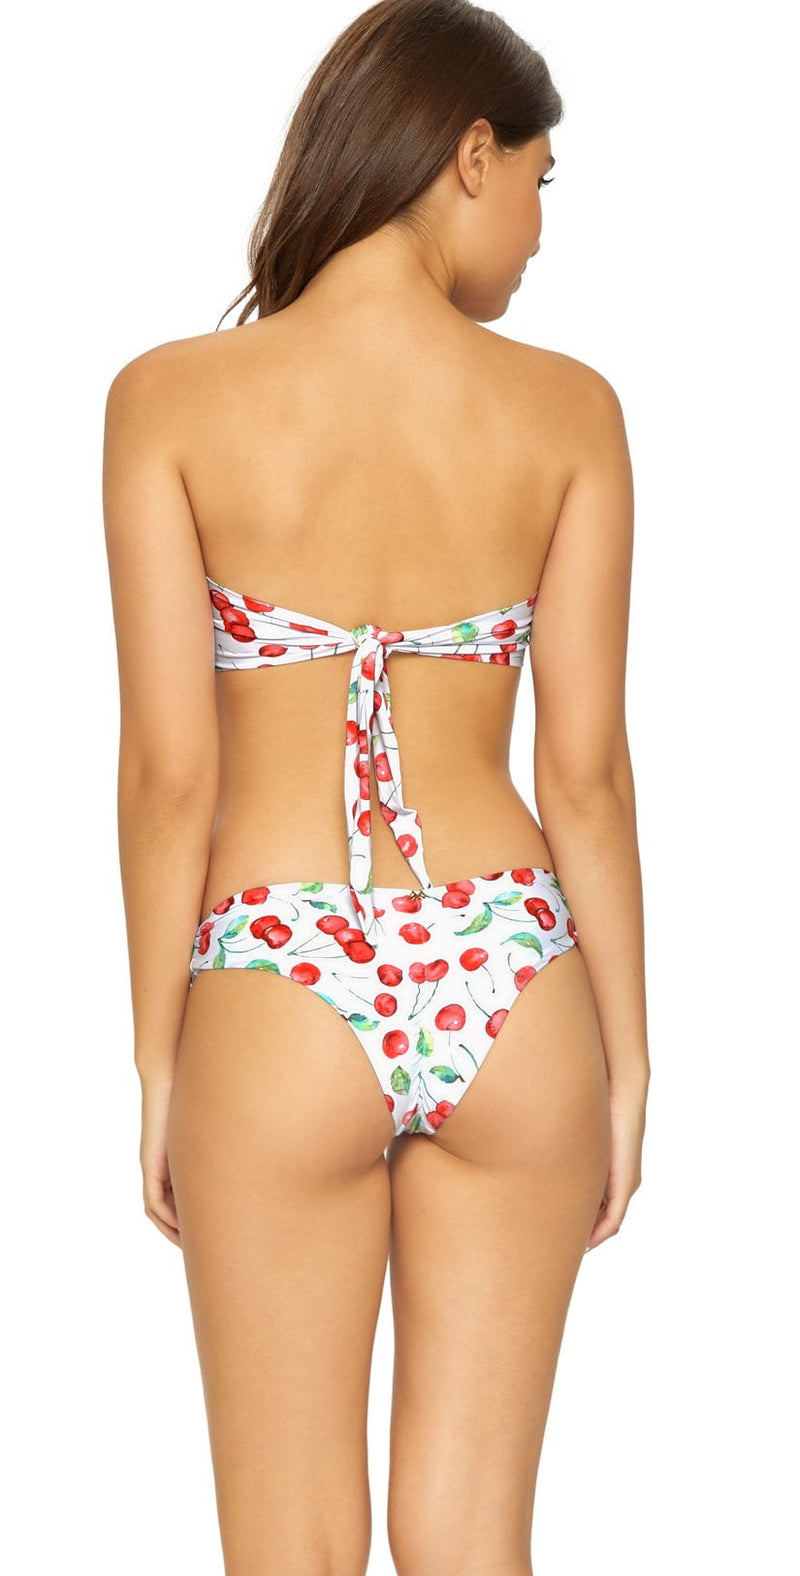 South Beach Swimsuits PilyQ Smocked Ruffle Bandeau Bikini Top in